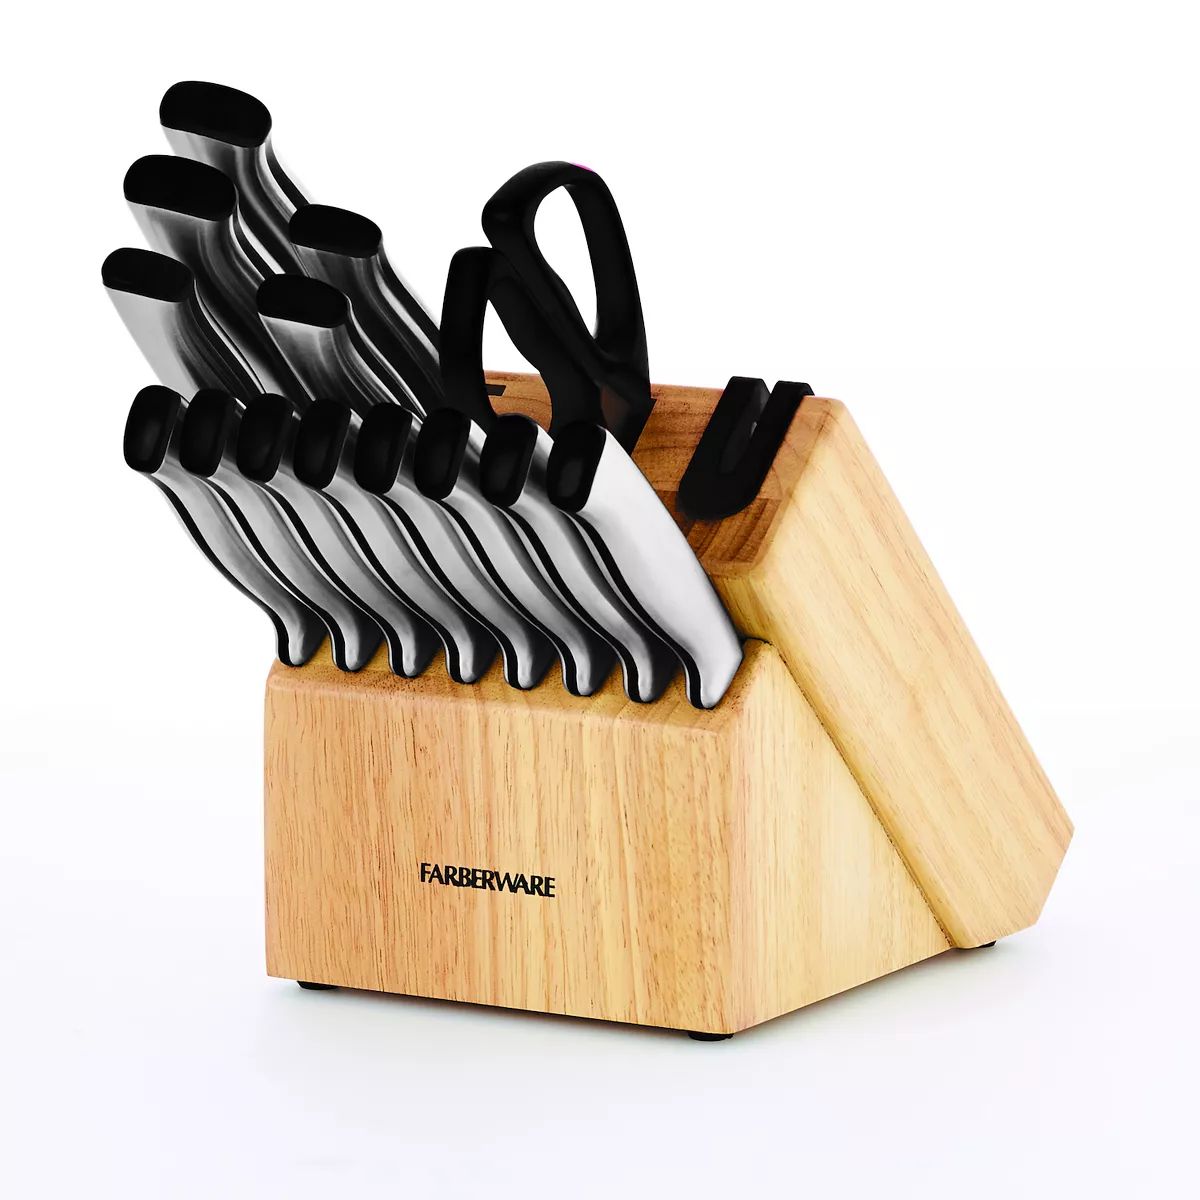 Farberware® Edgekeeper 15-pc. Knife Block Set with Built-In Sharpener | Kohl's